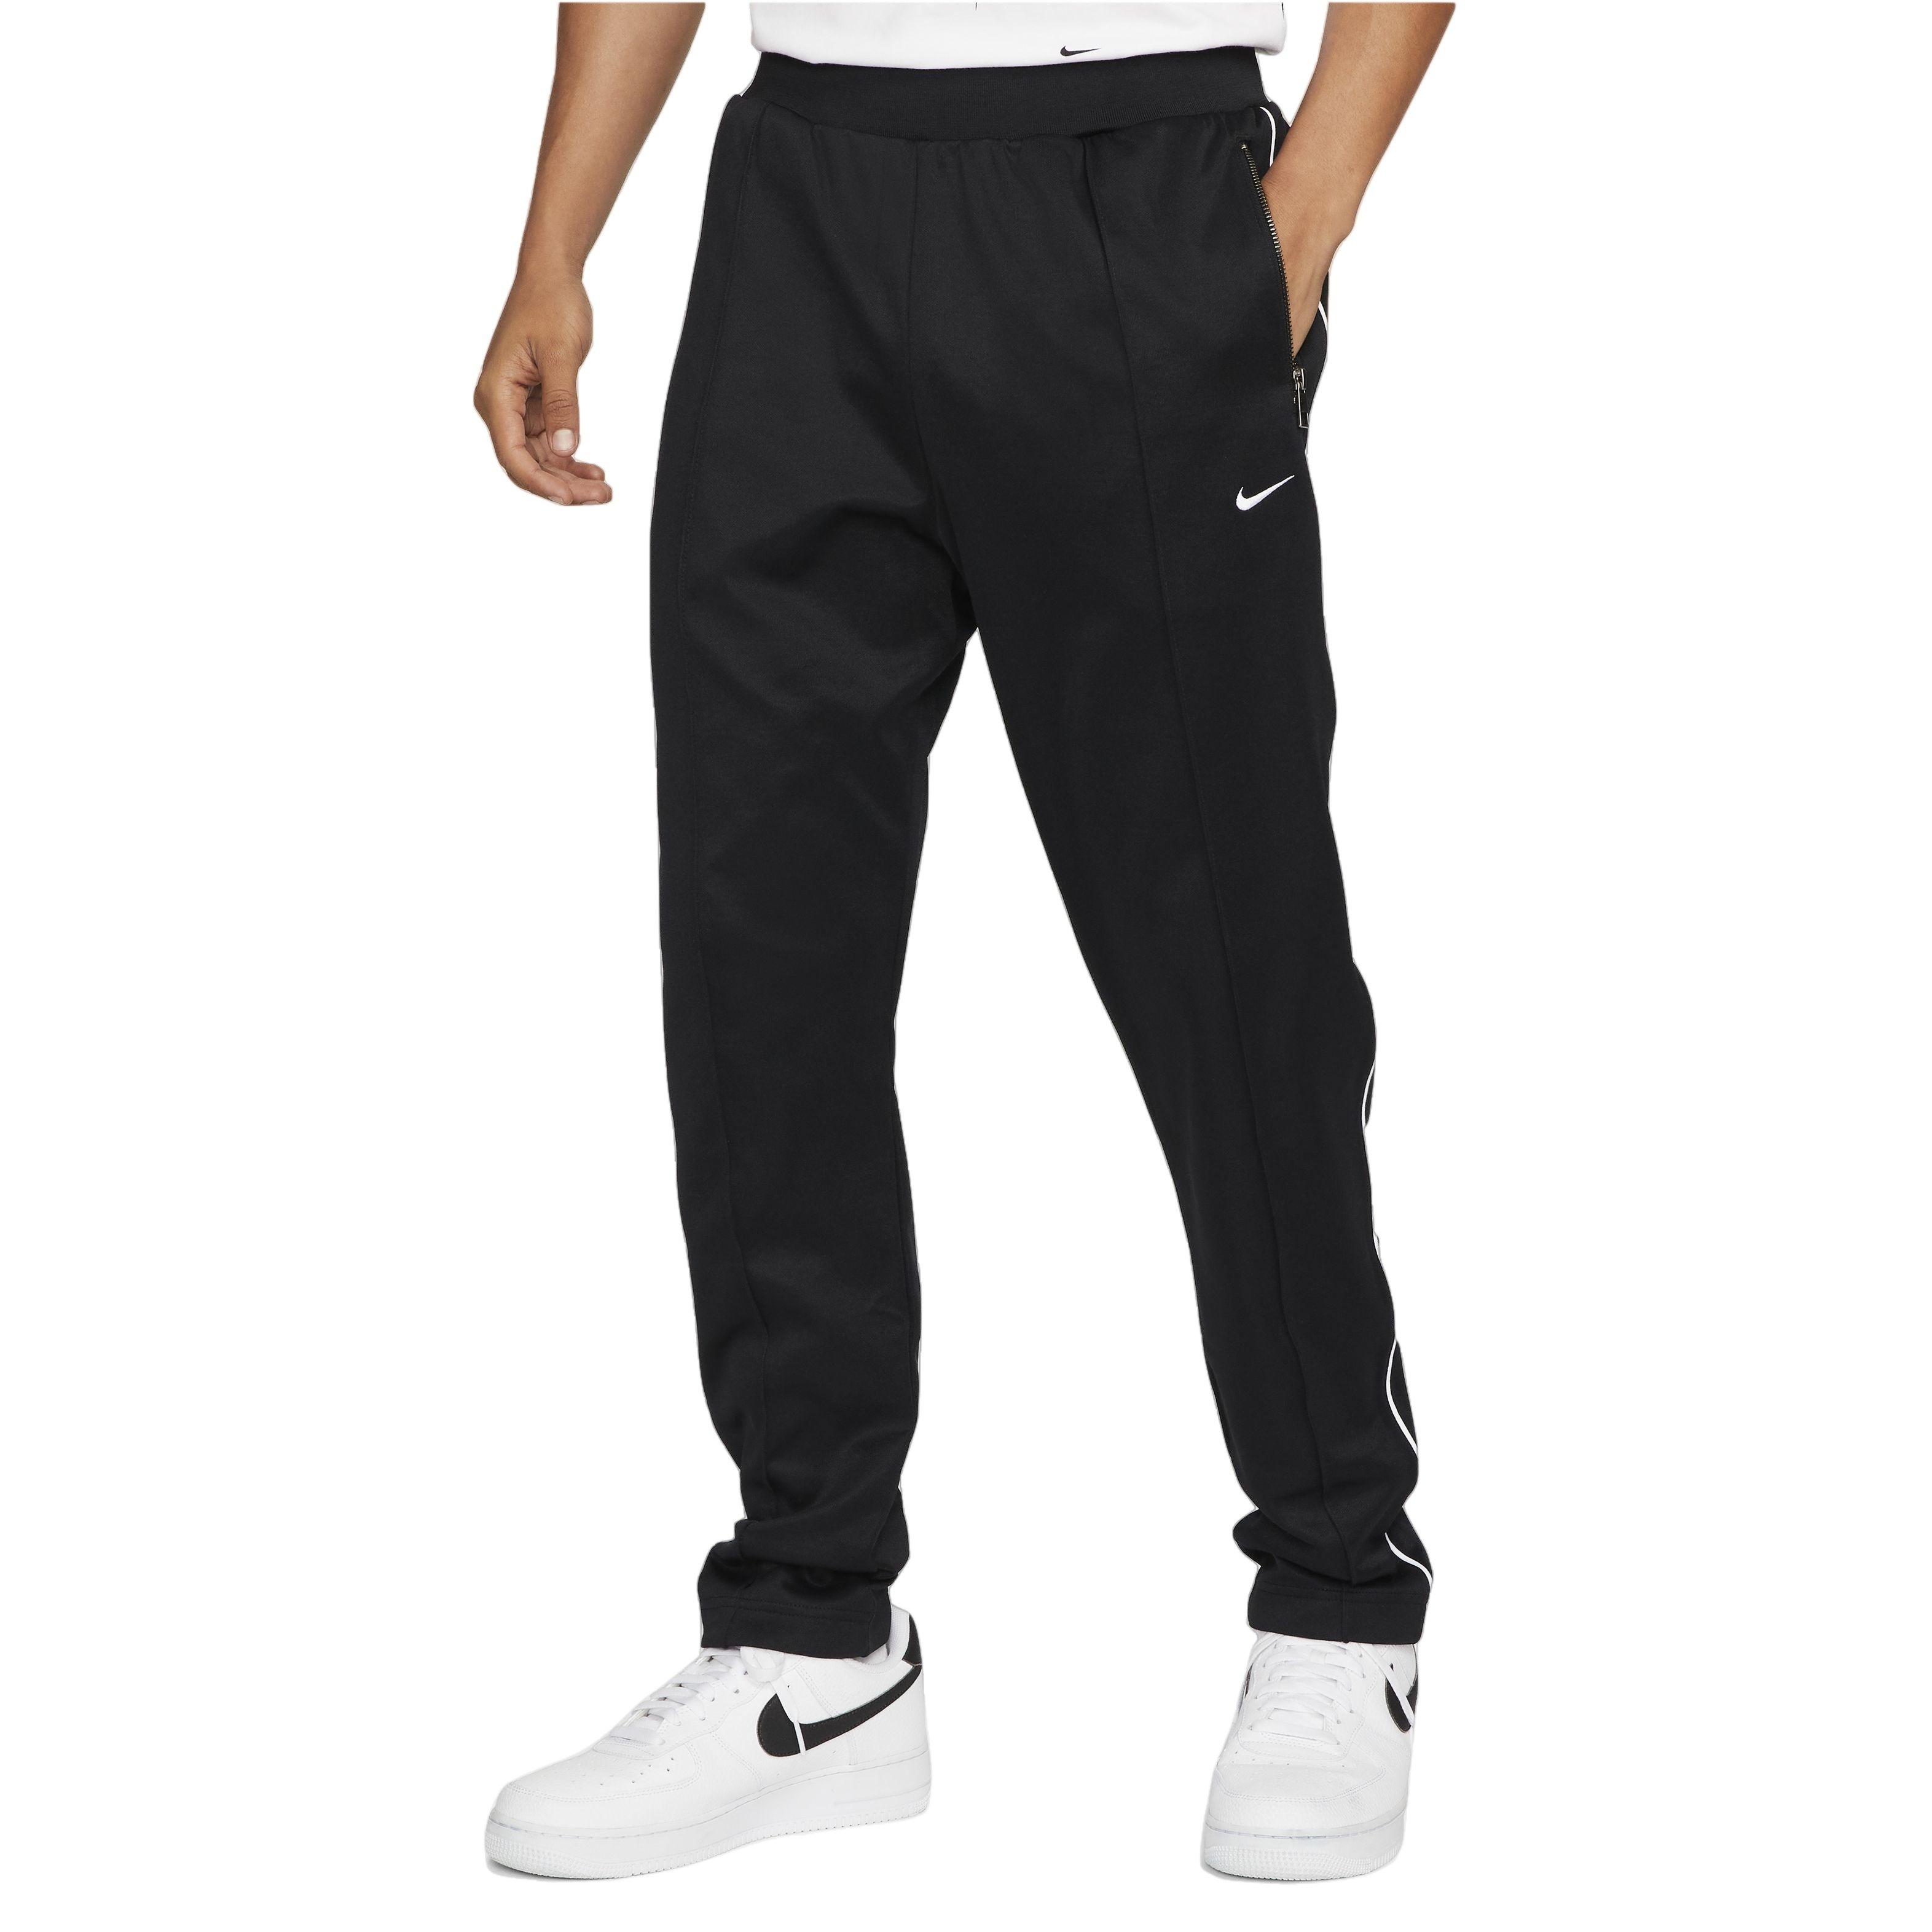 Nike Pro Dri-FIT ADV Recovery Tight - Black/Black/Iron Grey - Mens Clothing